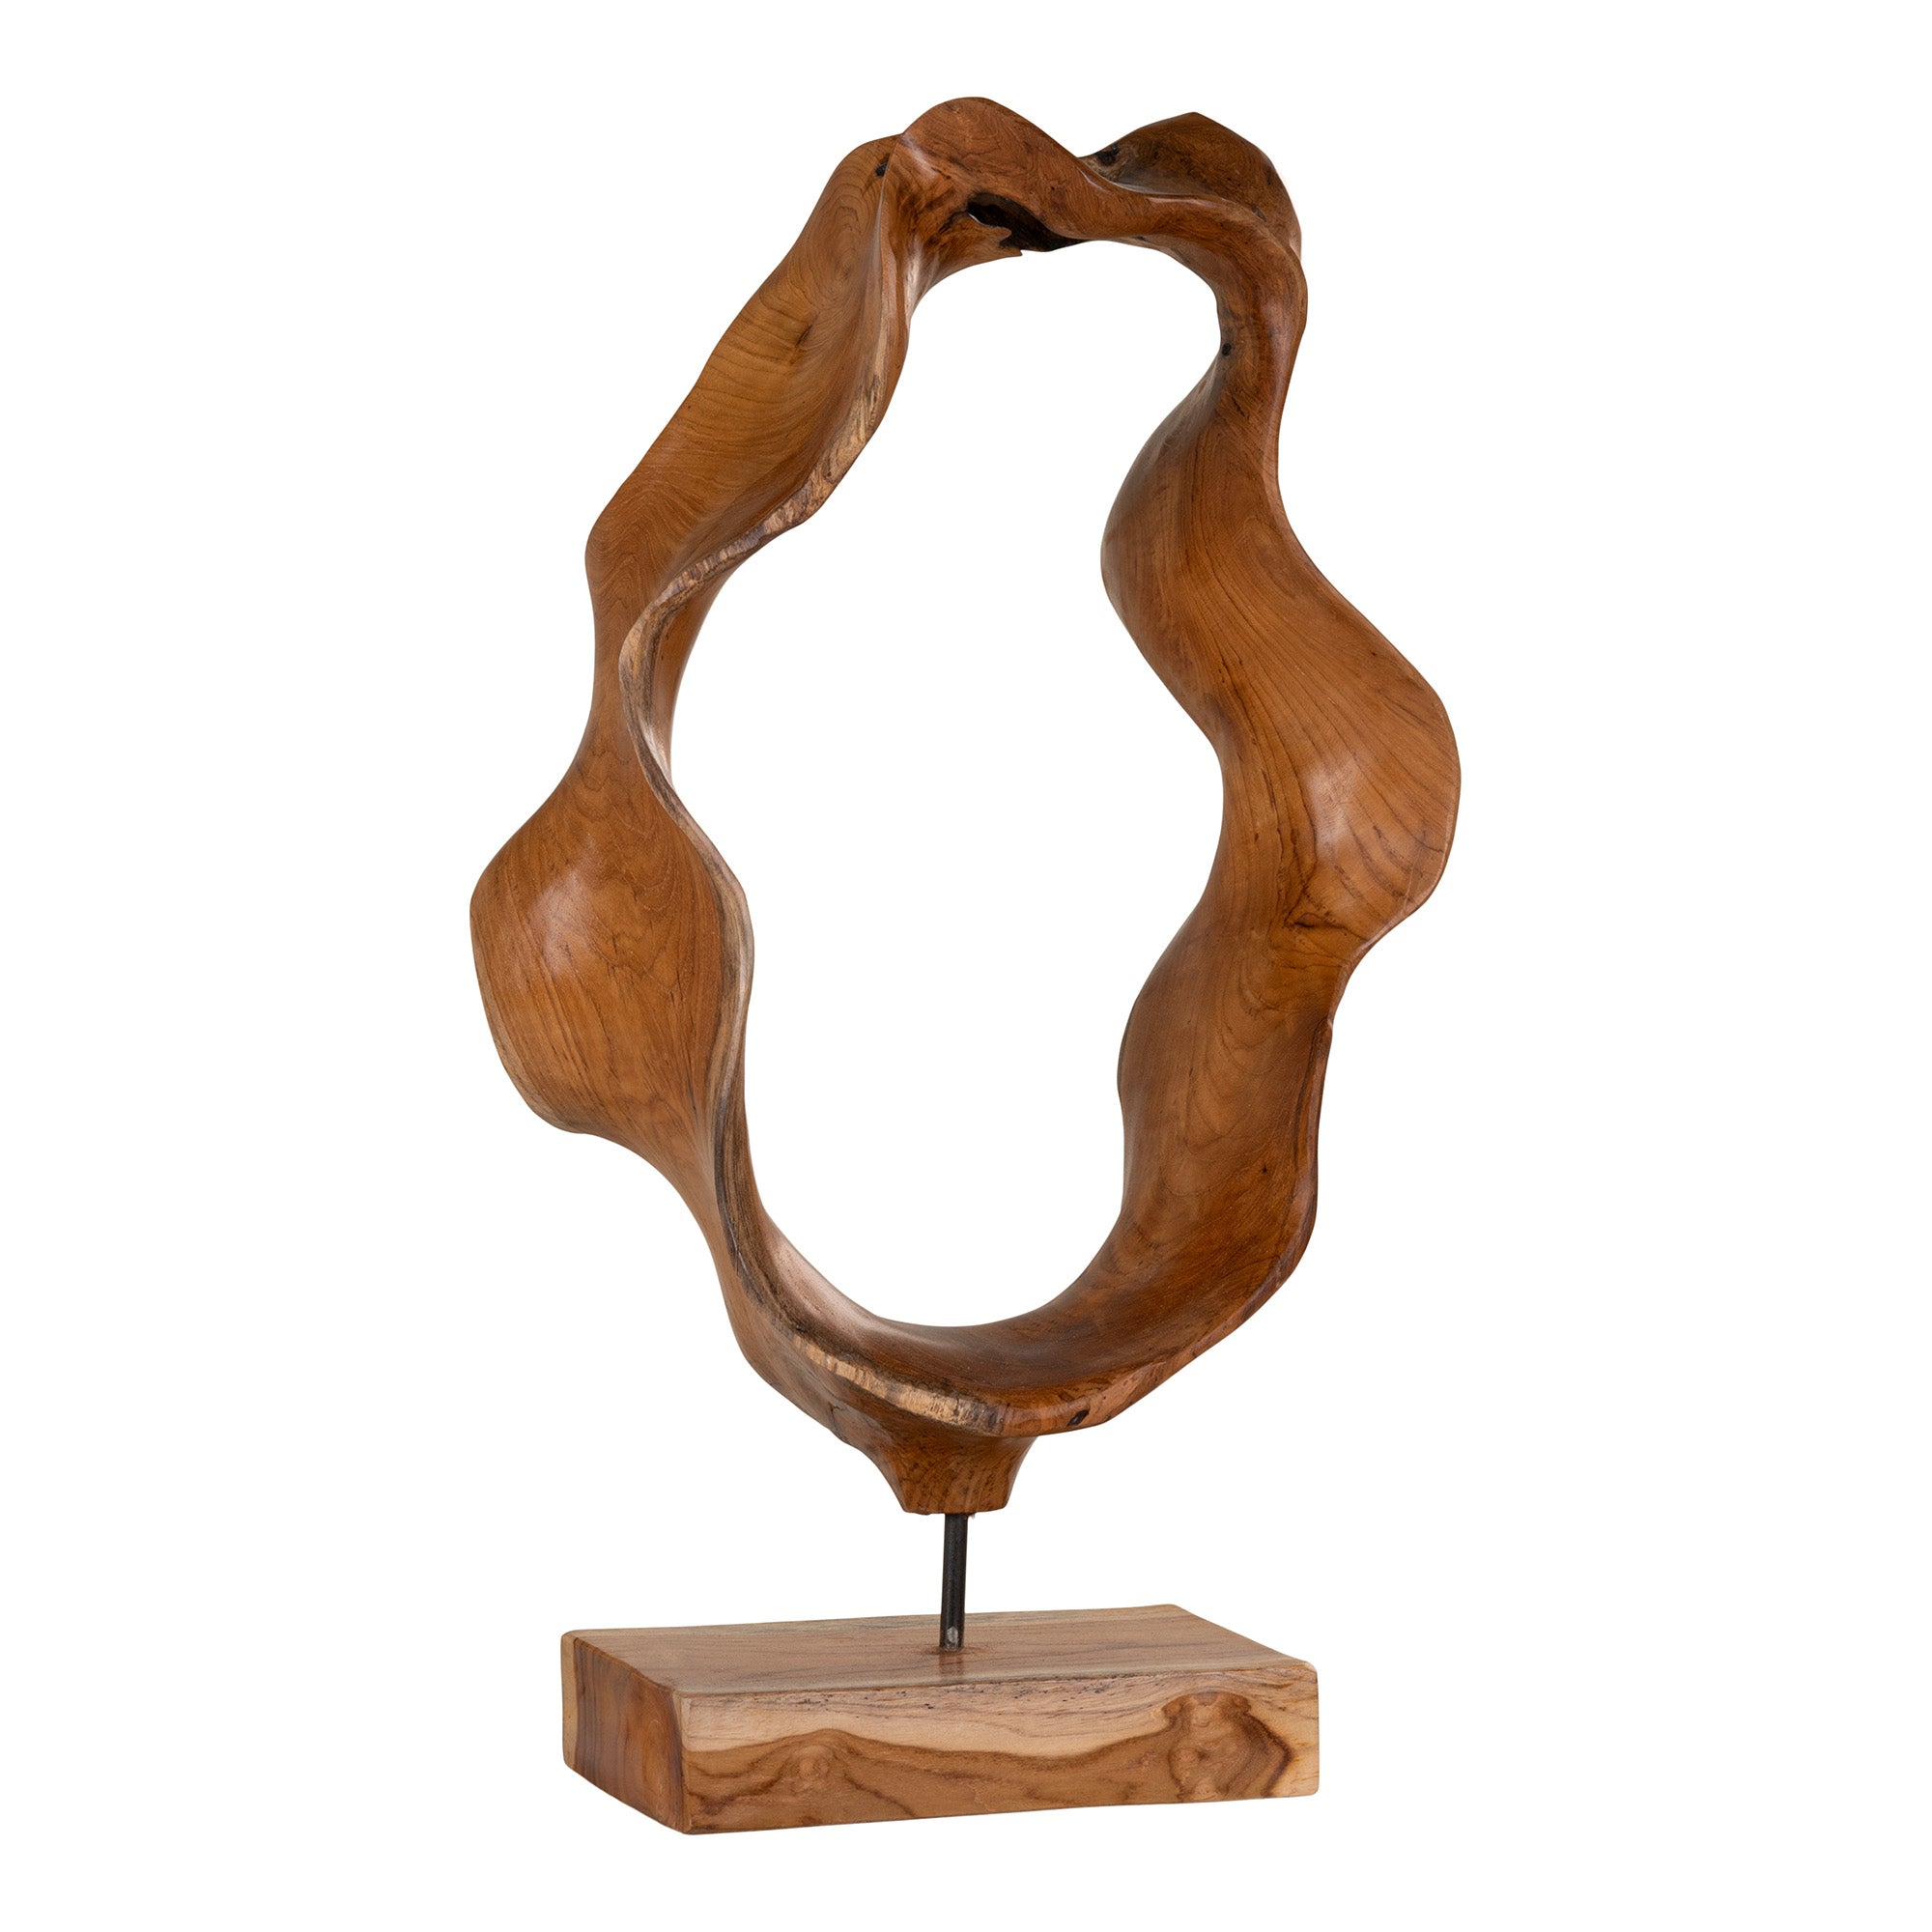 Donato Skulptur - Skulptur I Teaktræ, Unik Organisk Form, Natur, 30X20X60 Cm ⎮ 5713917018994 ⎮ 4501170 